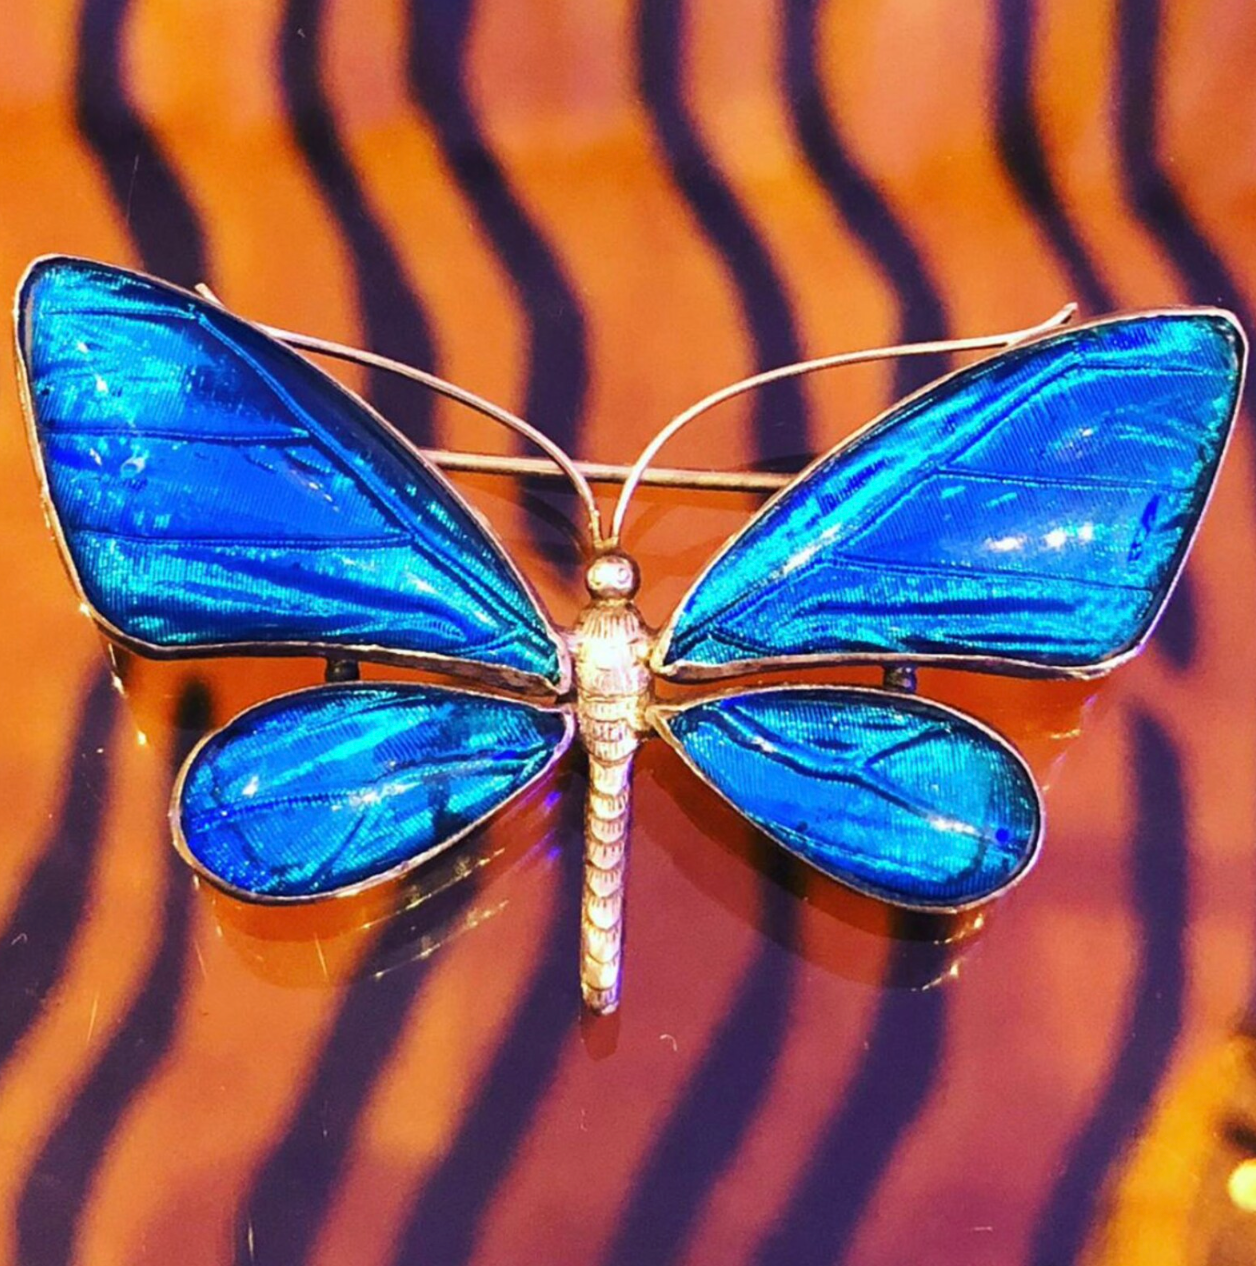 Antique Silver Butterfly Brooch Pin Blue Wings